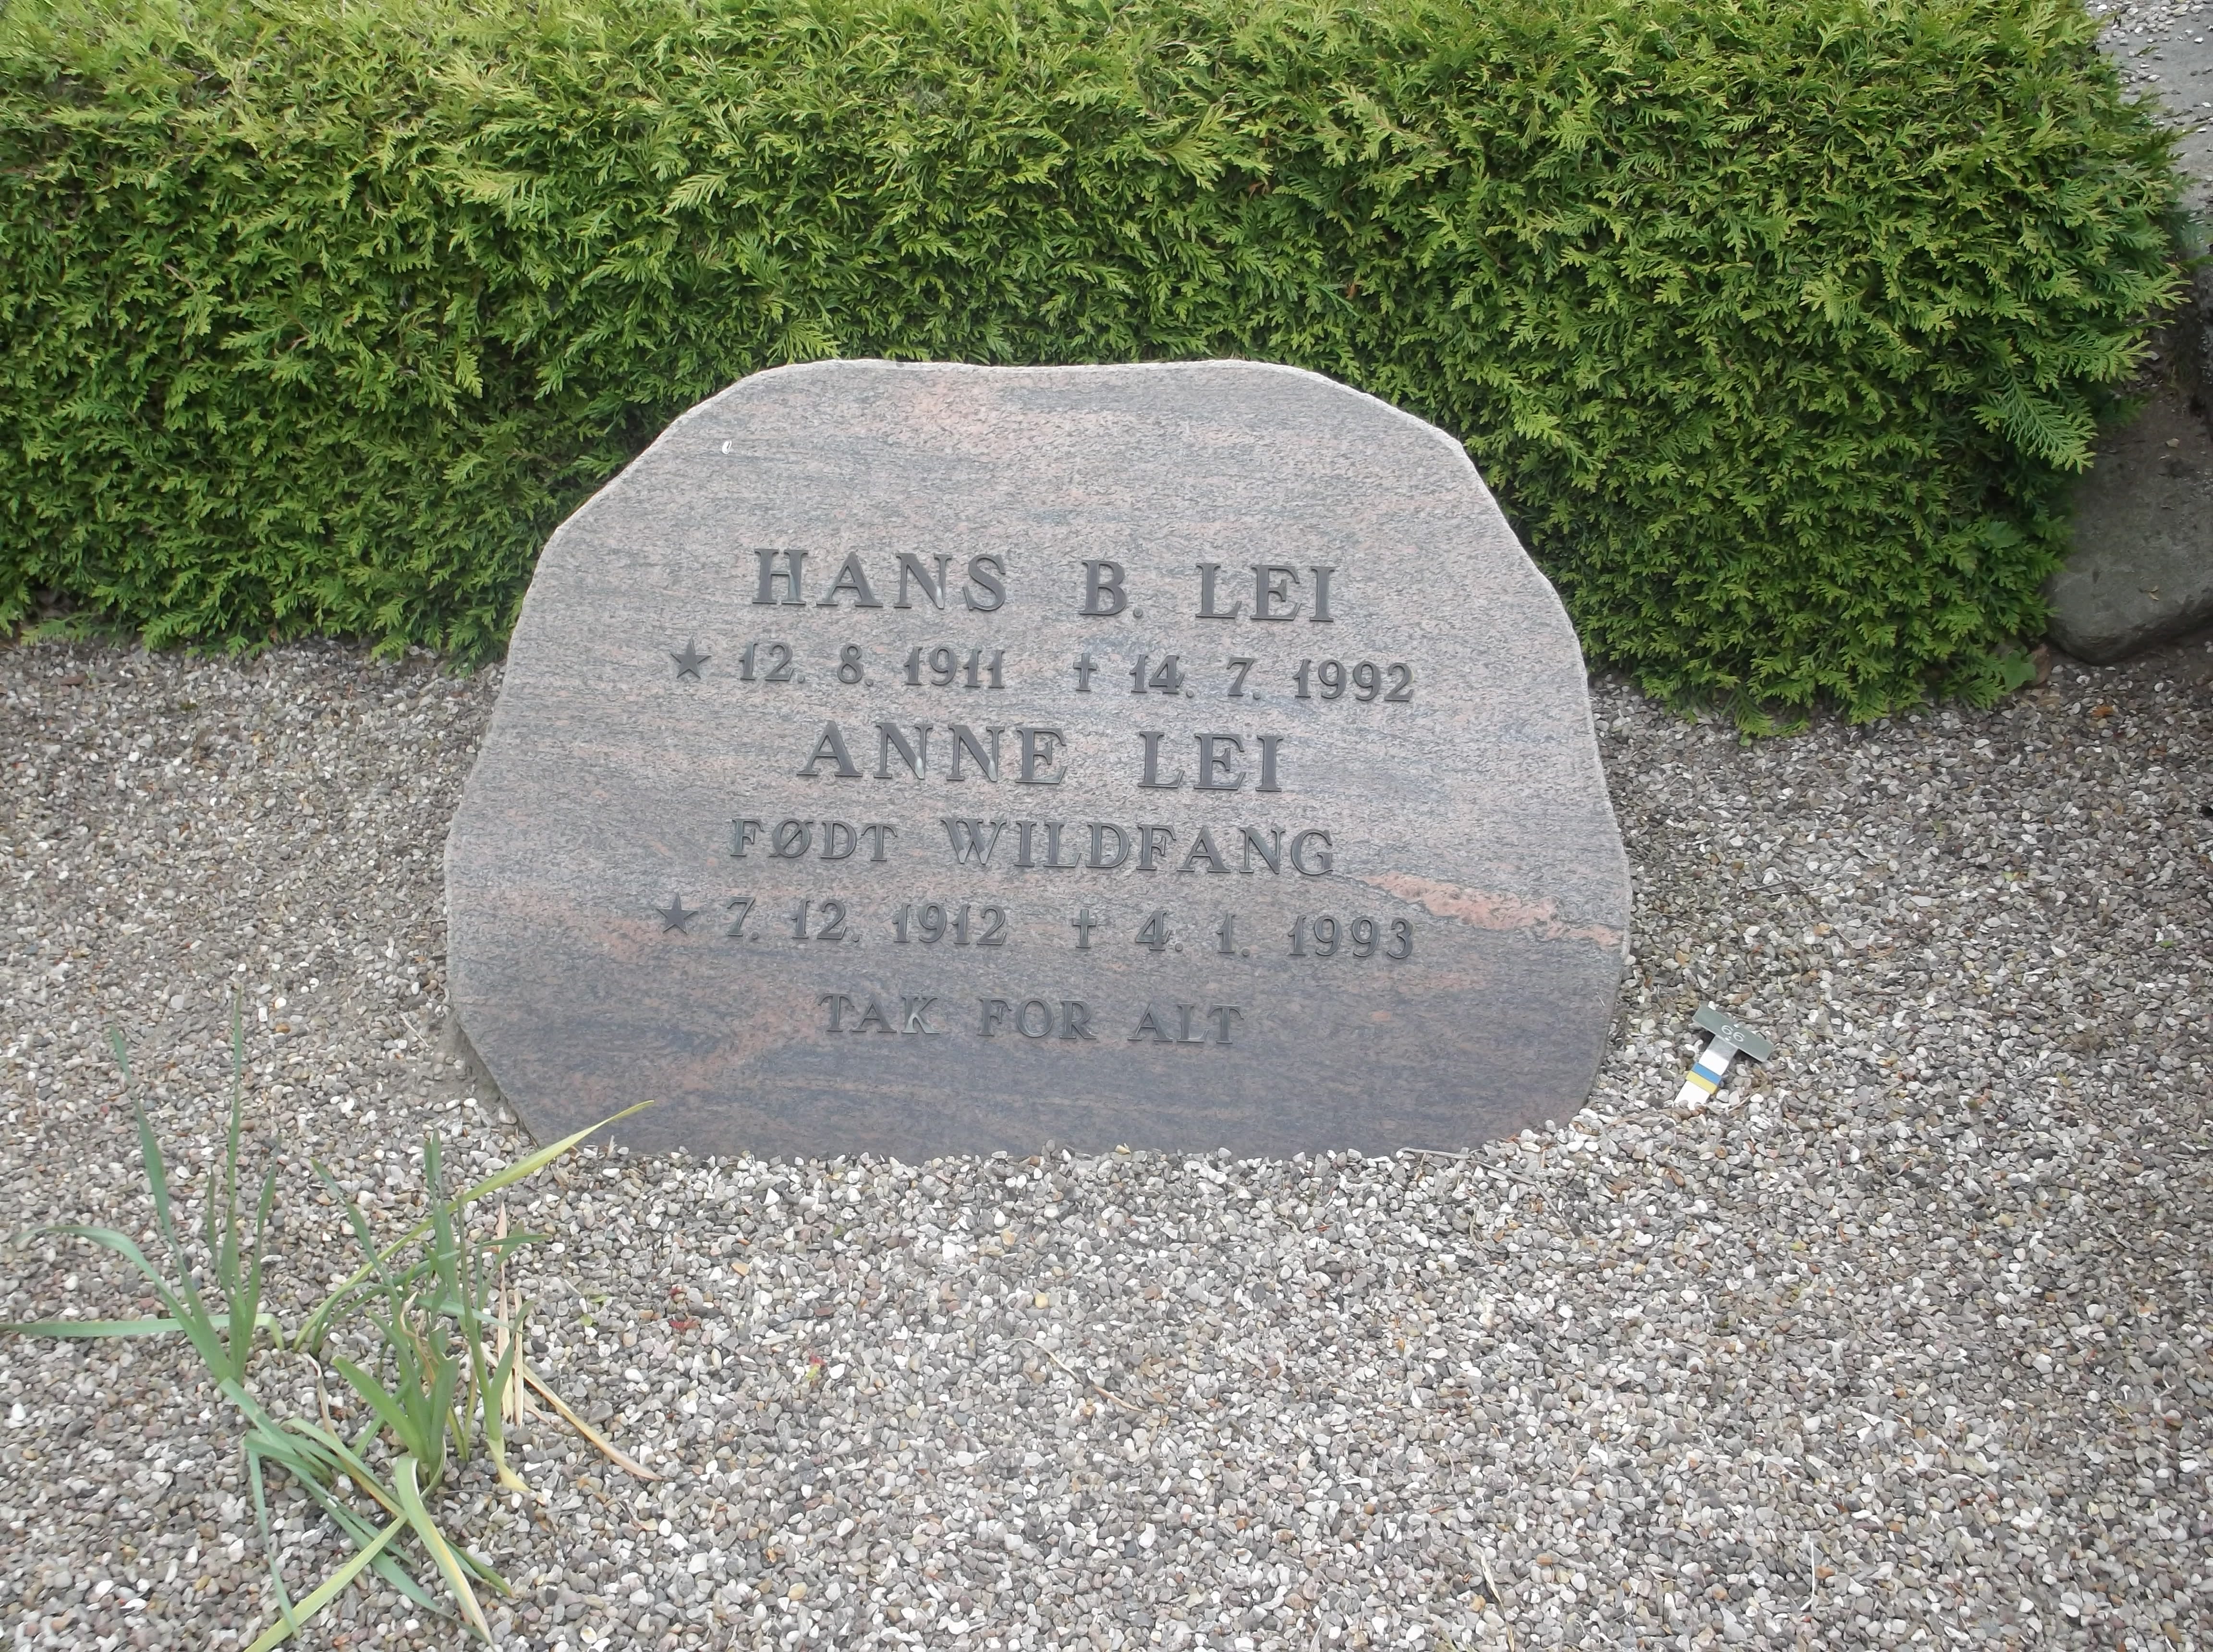 Hans B. Lei